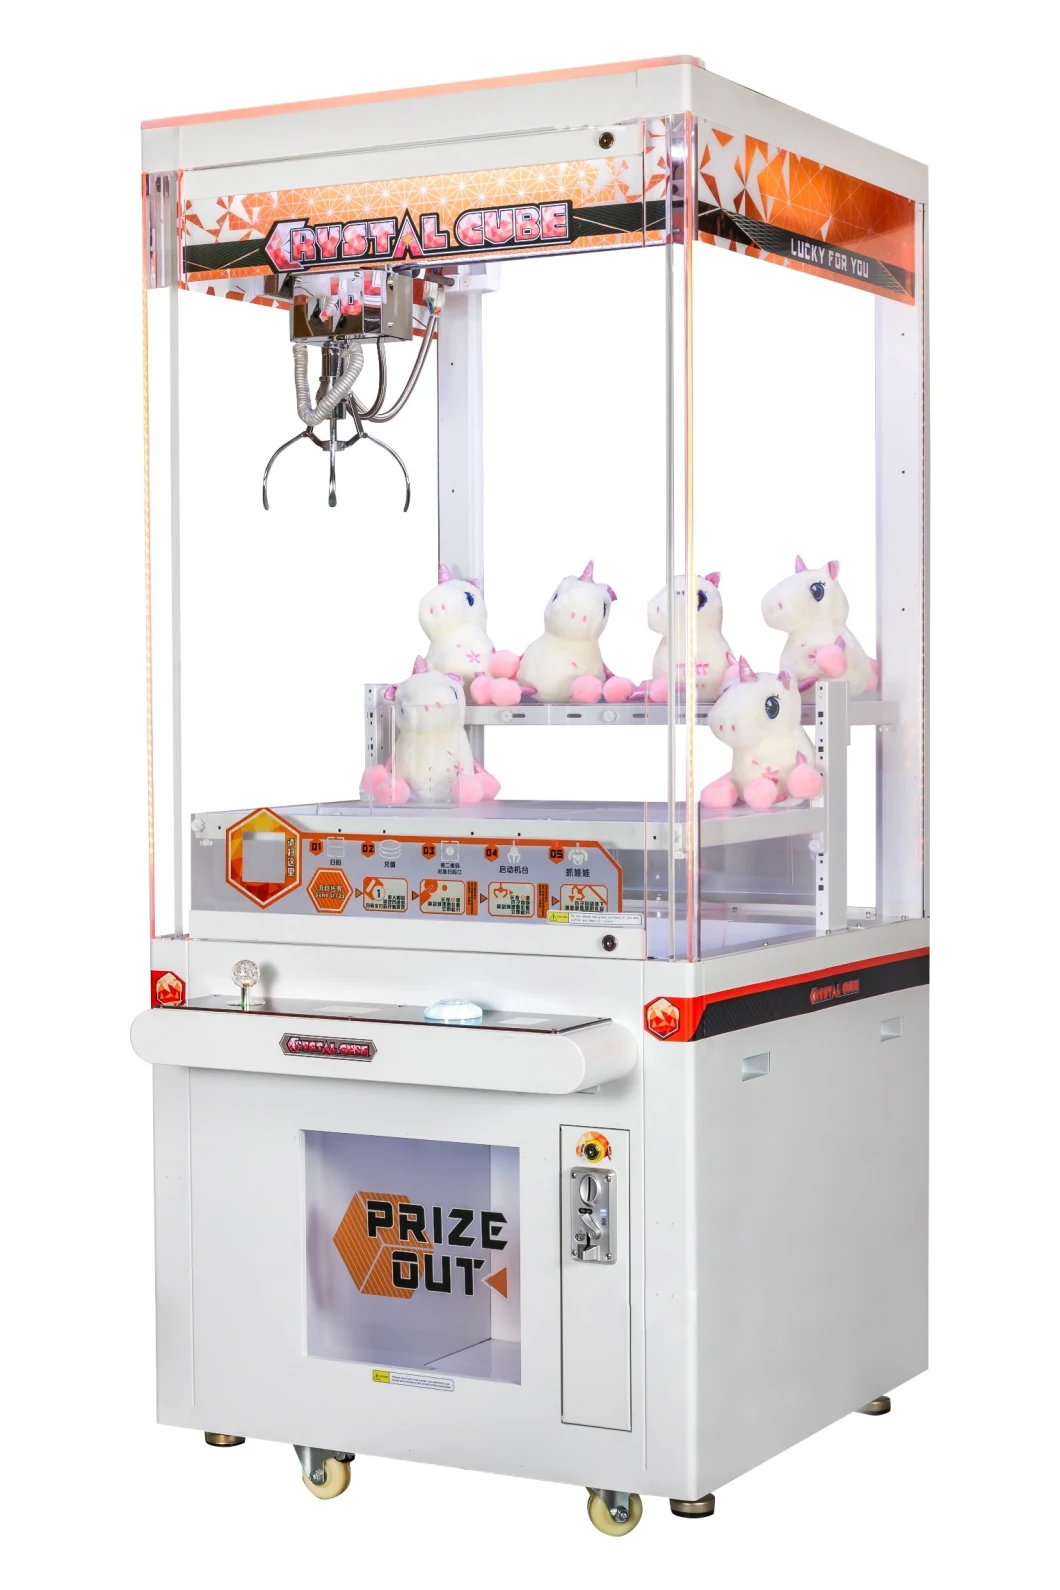 Crystal Love/Toy Vending/Gift/Prize/Price/Vending/Amusement/Arcade/Crane Claw/Toy Crane/Arcade Claw/Claw Crane /Claw/Crane/Game Machine